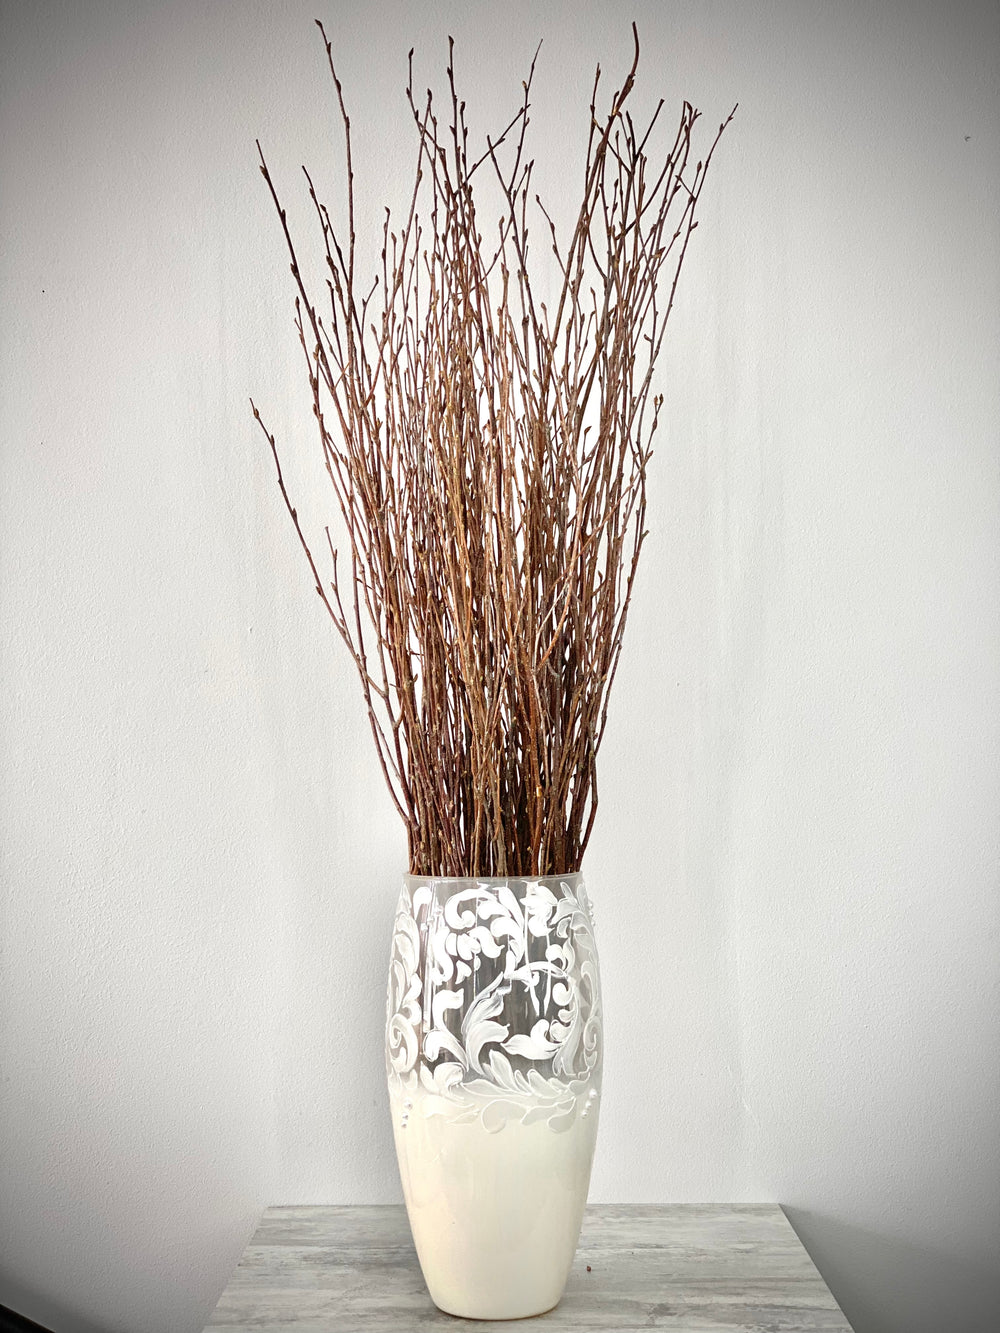 Uieke 50PCS Birch Twigs – 17 Inch Natural Dried Plants Decorative Birch  Branches for DIY Crafts, Birch Sticks for Vases Wedding Arrangements Home